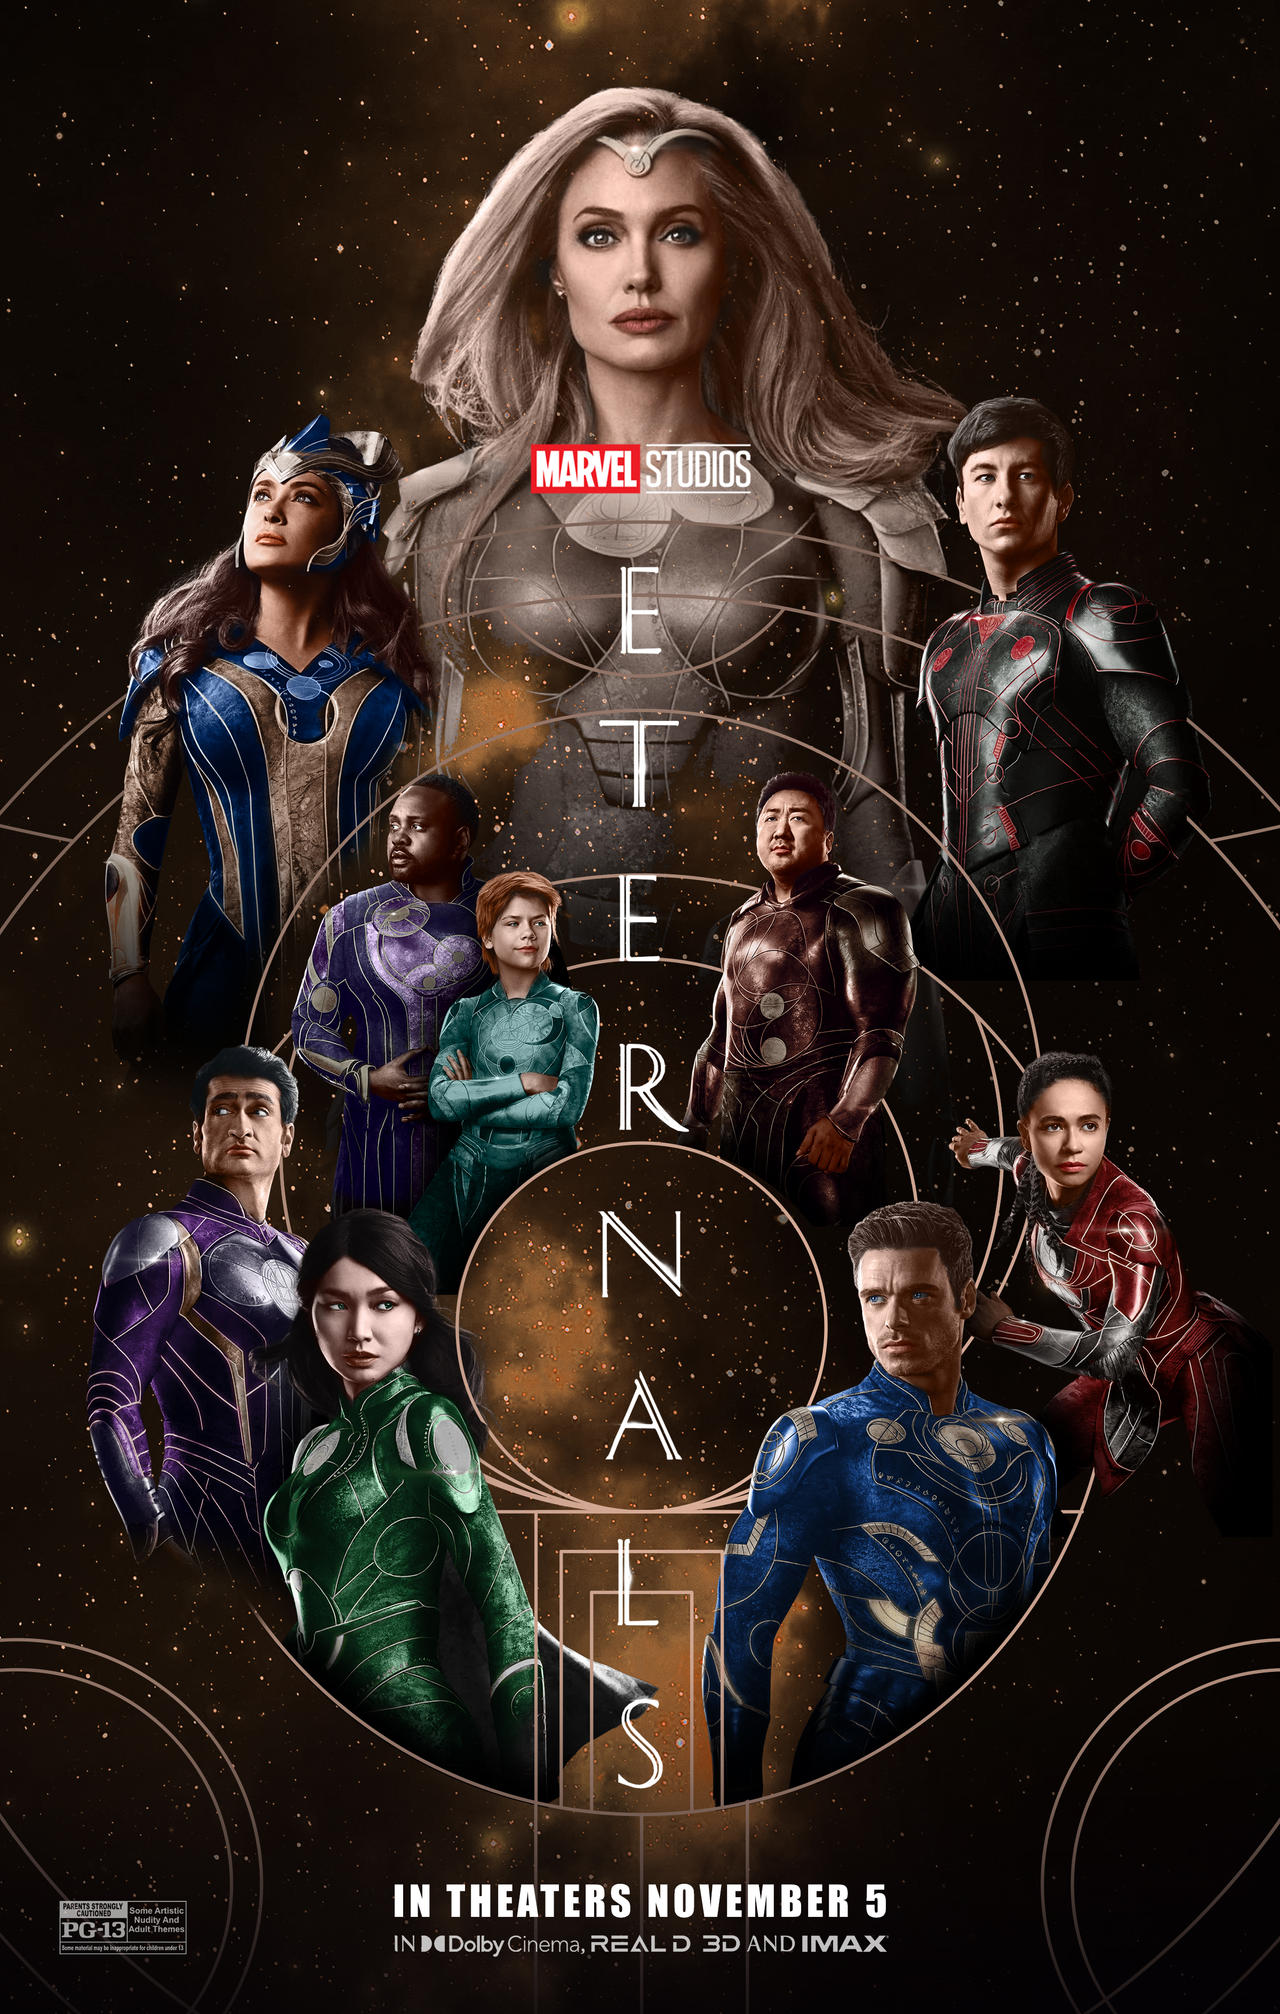 Marvel Poster by PZNS on DeviantArt